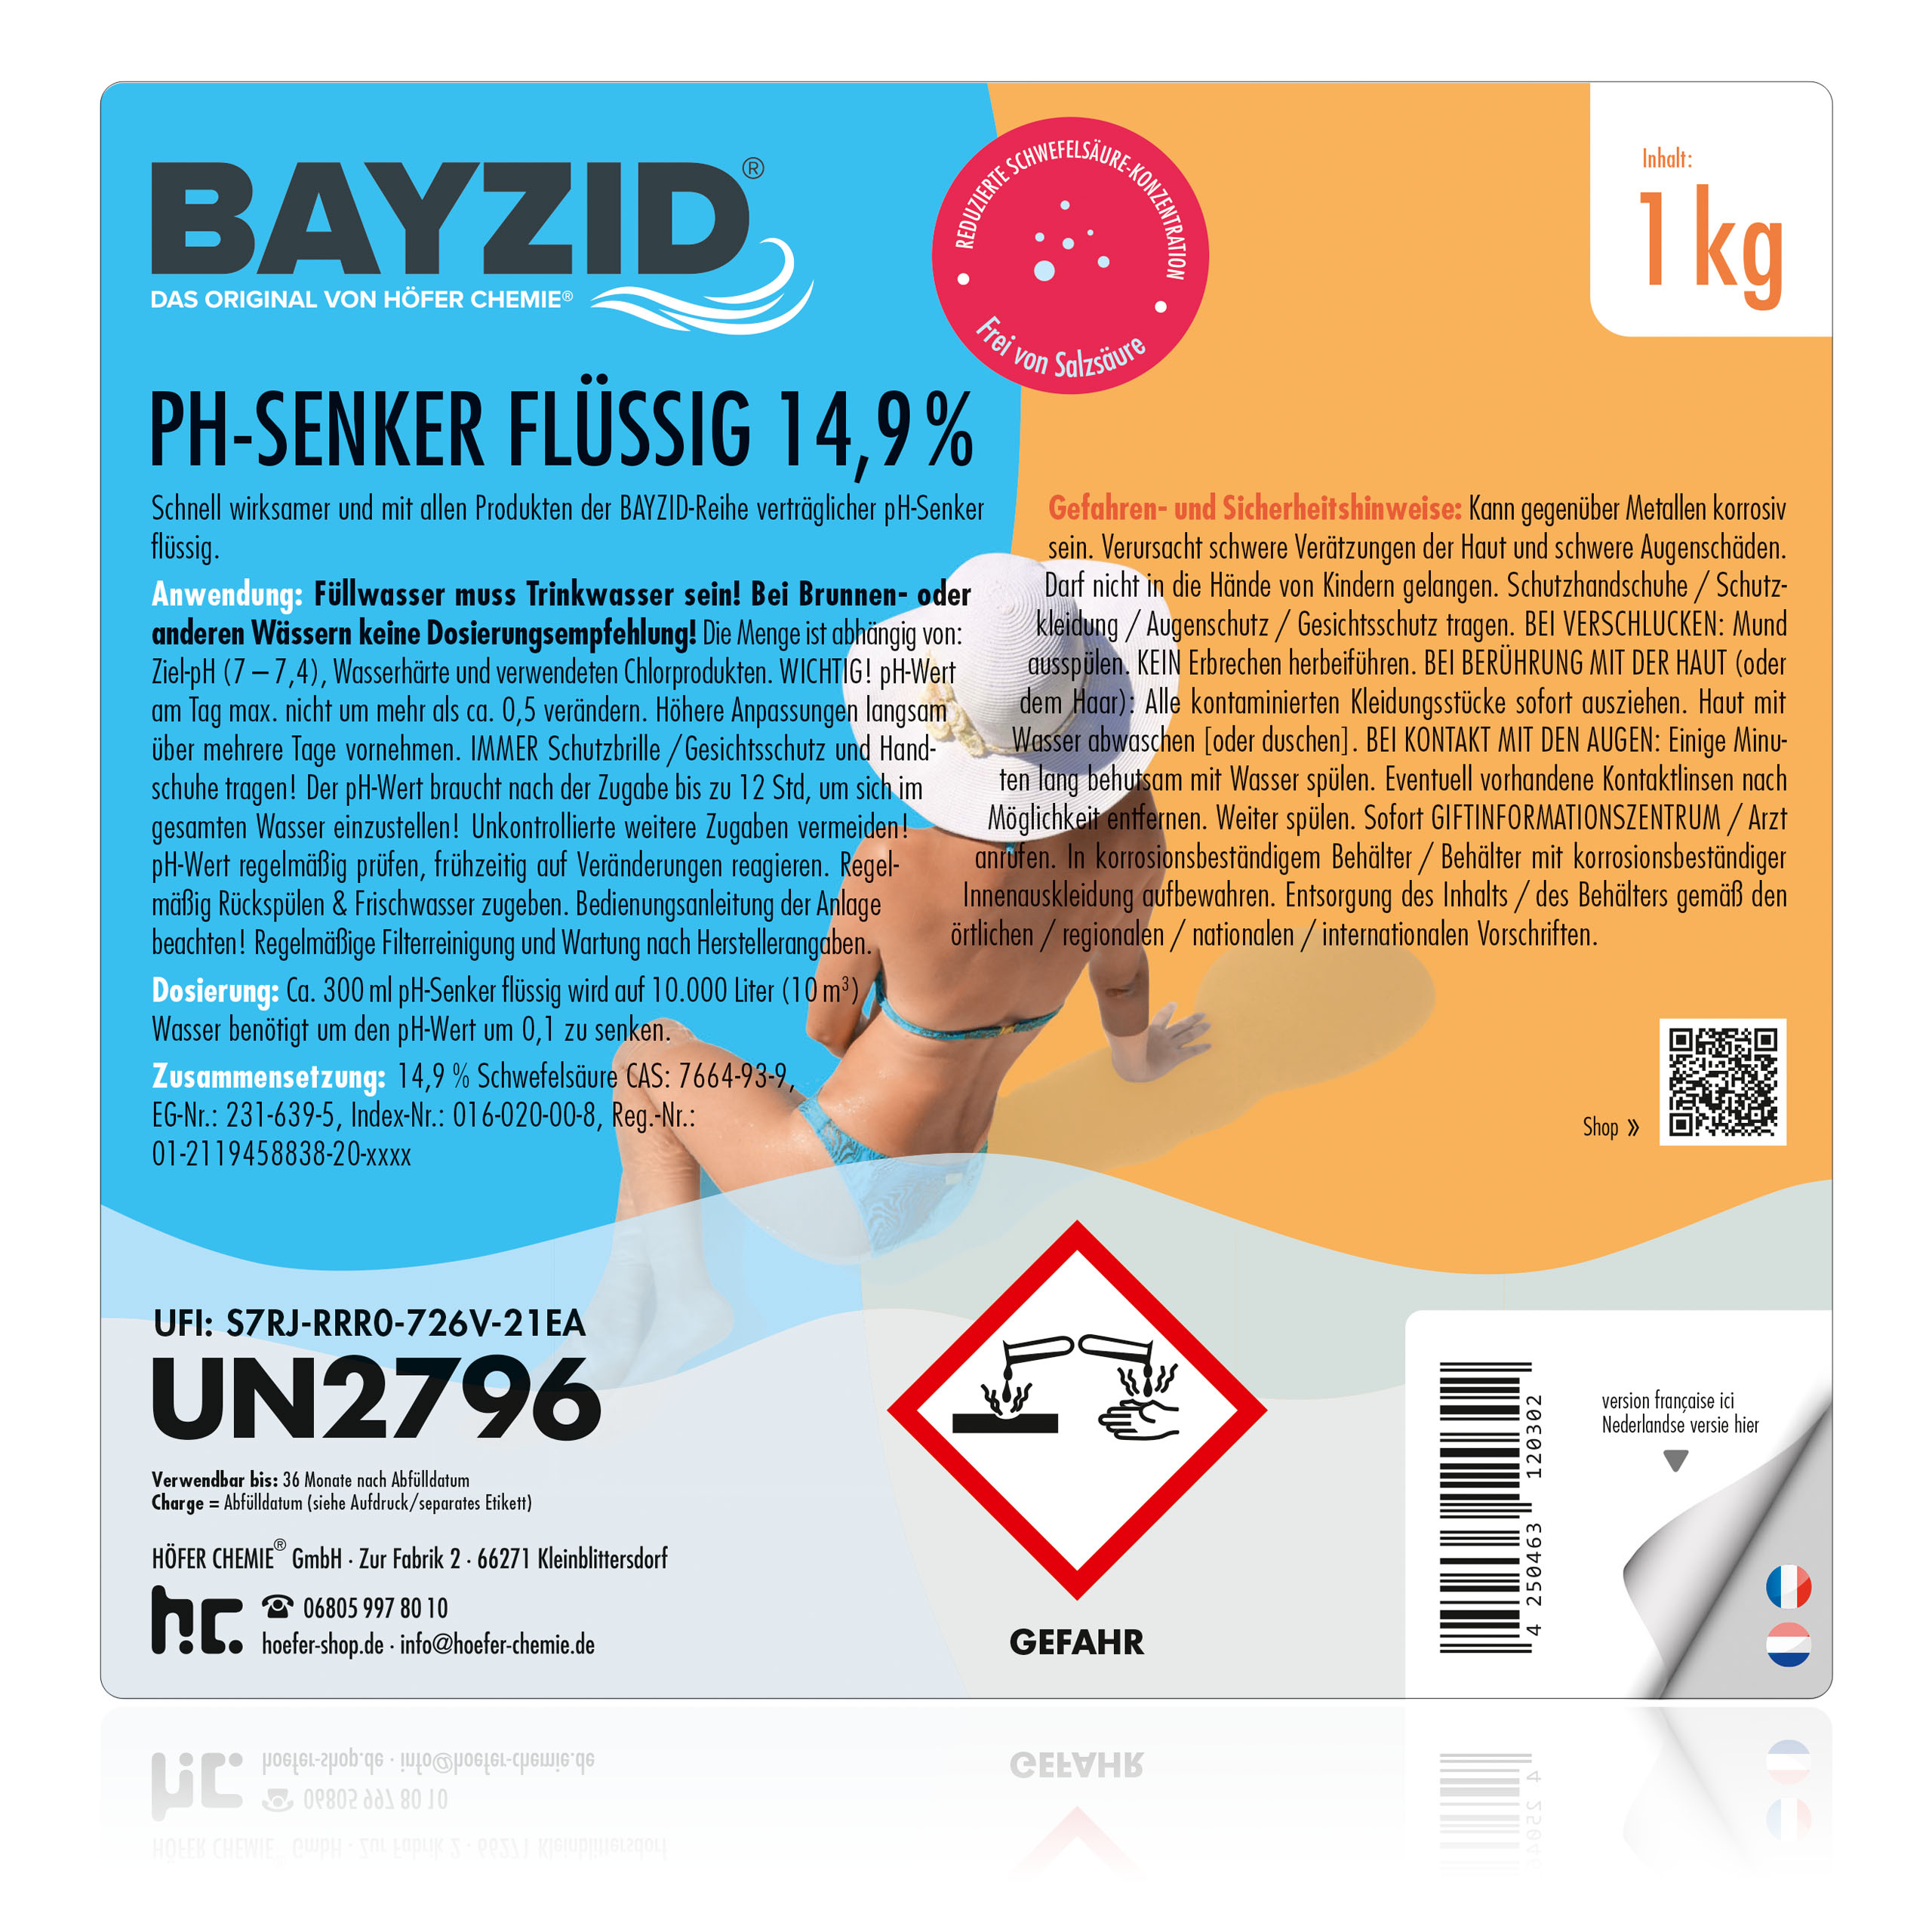 1 kg BAYZID® pH Moins liquide 14,9%